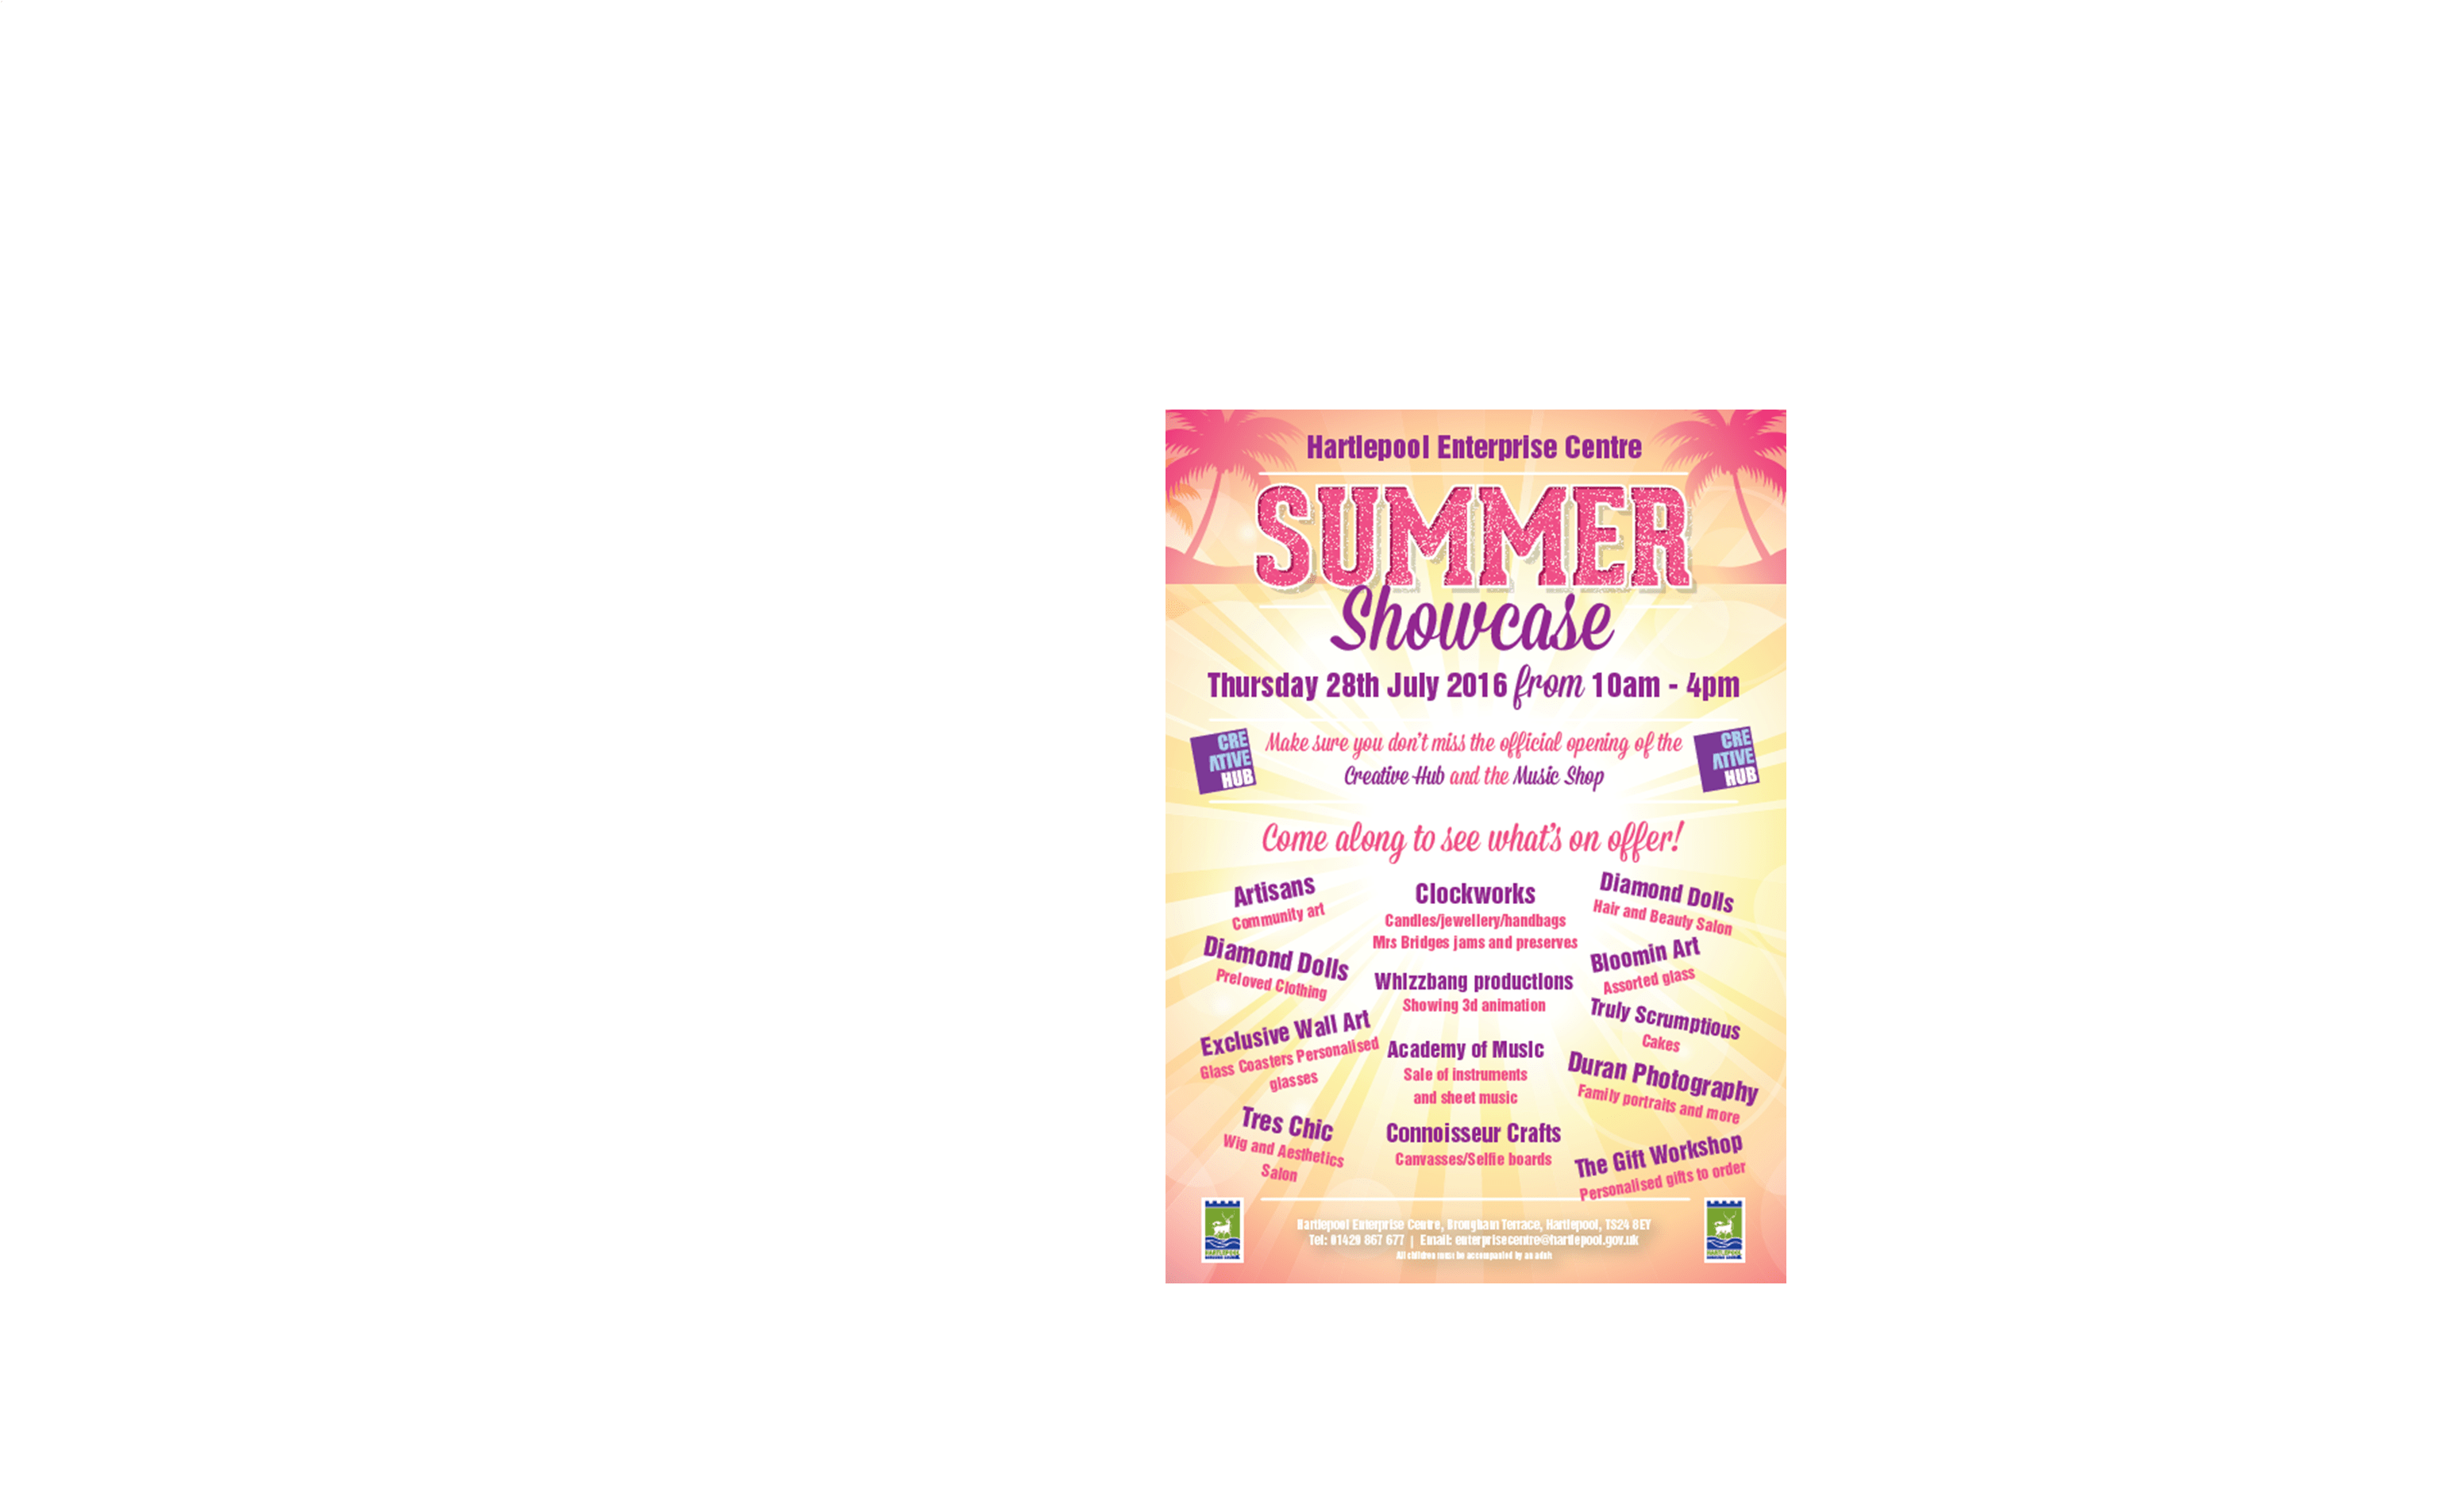 Summer Showcase at Hartlepool Enterprise Centre